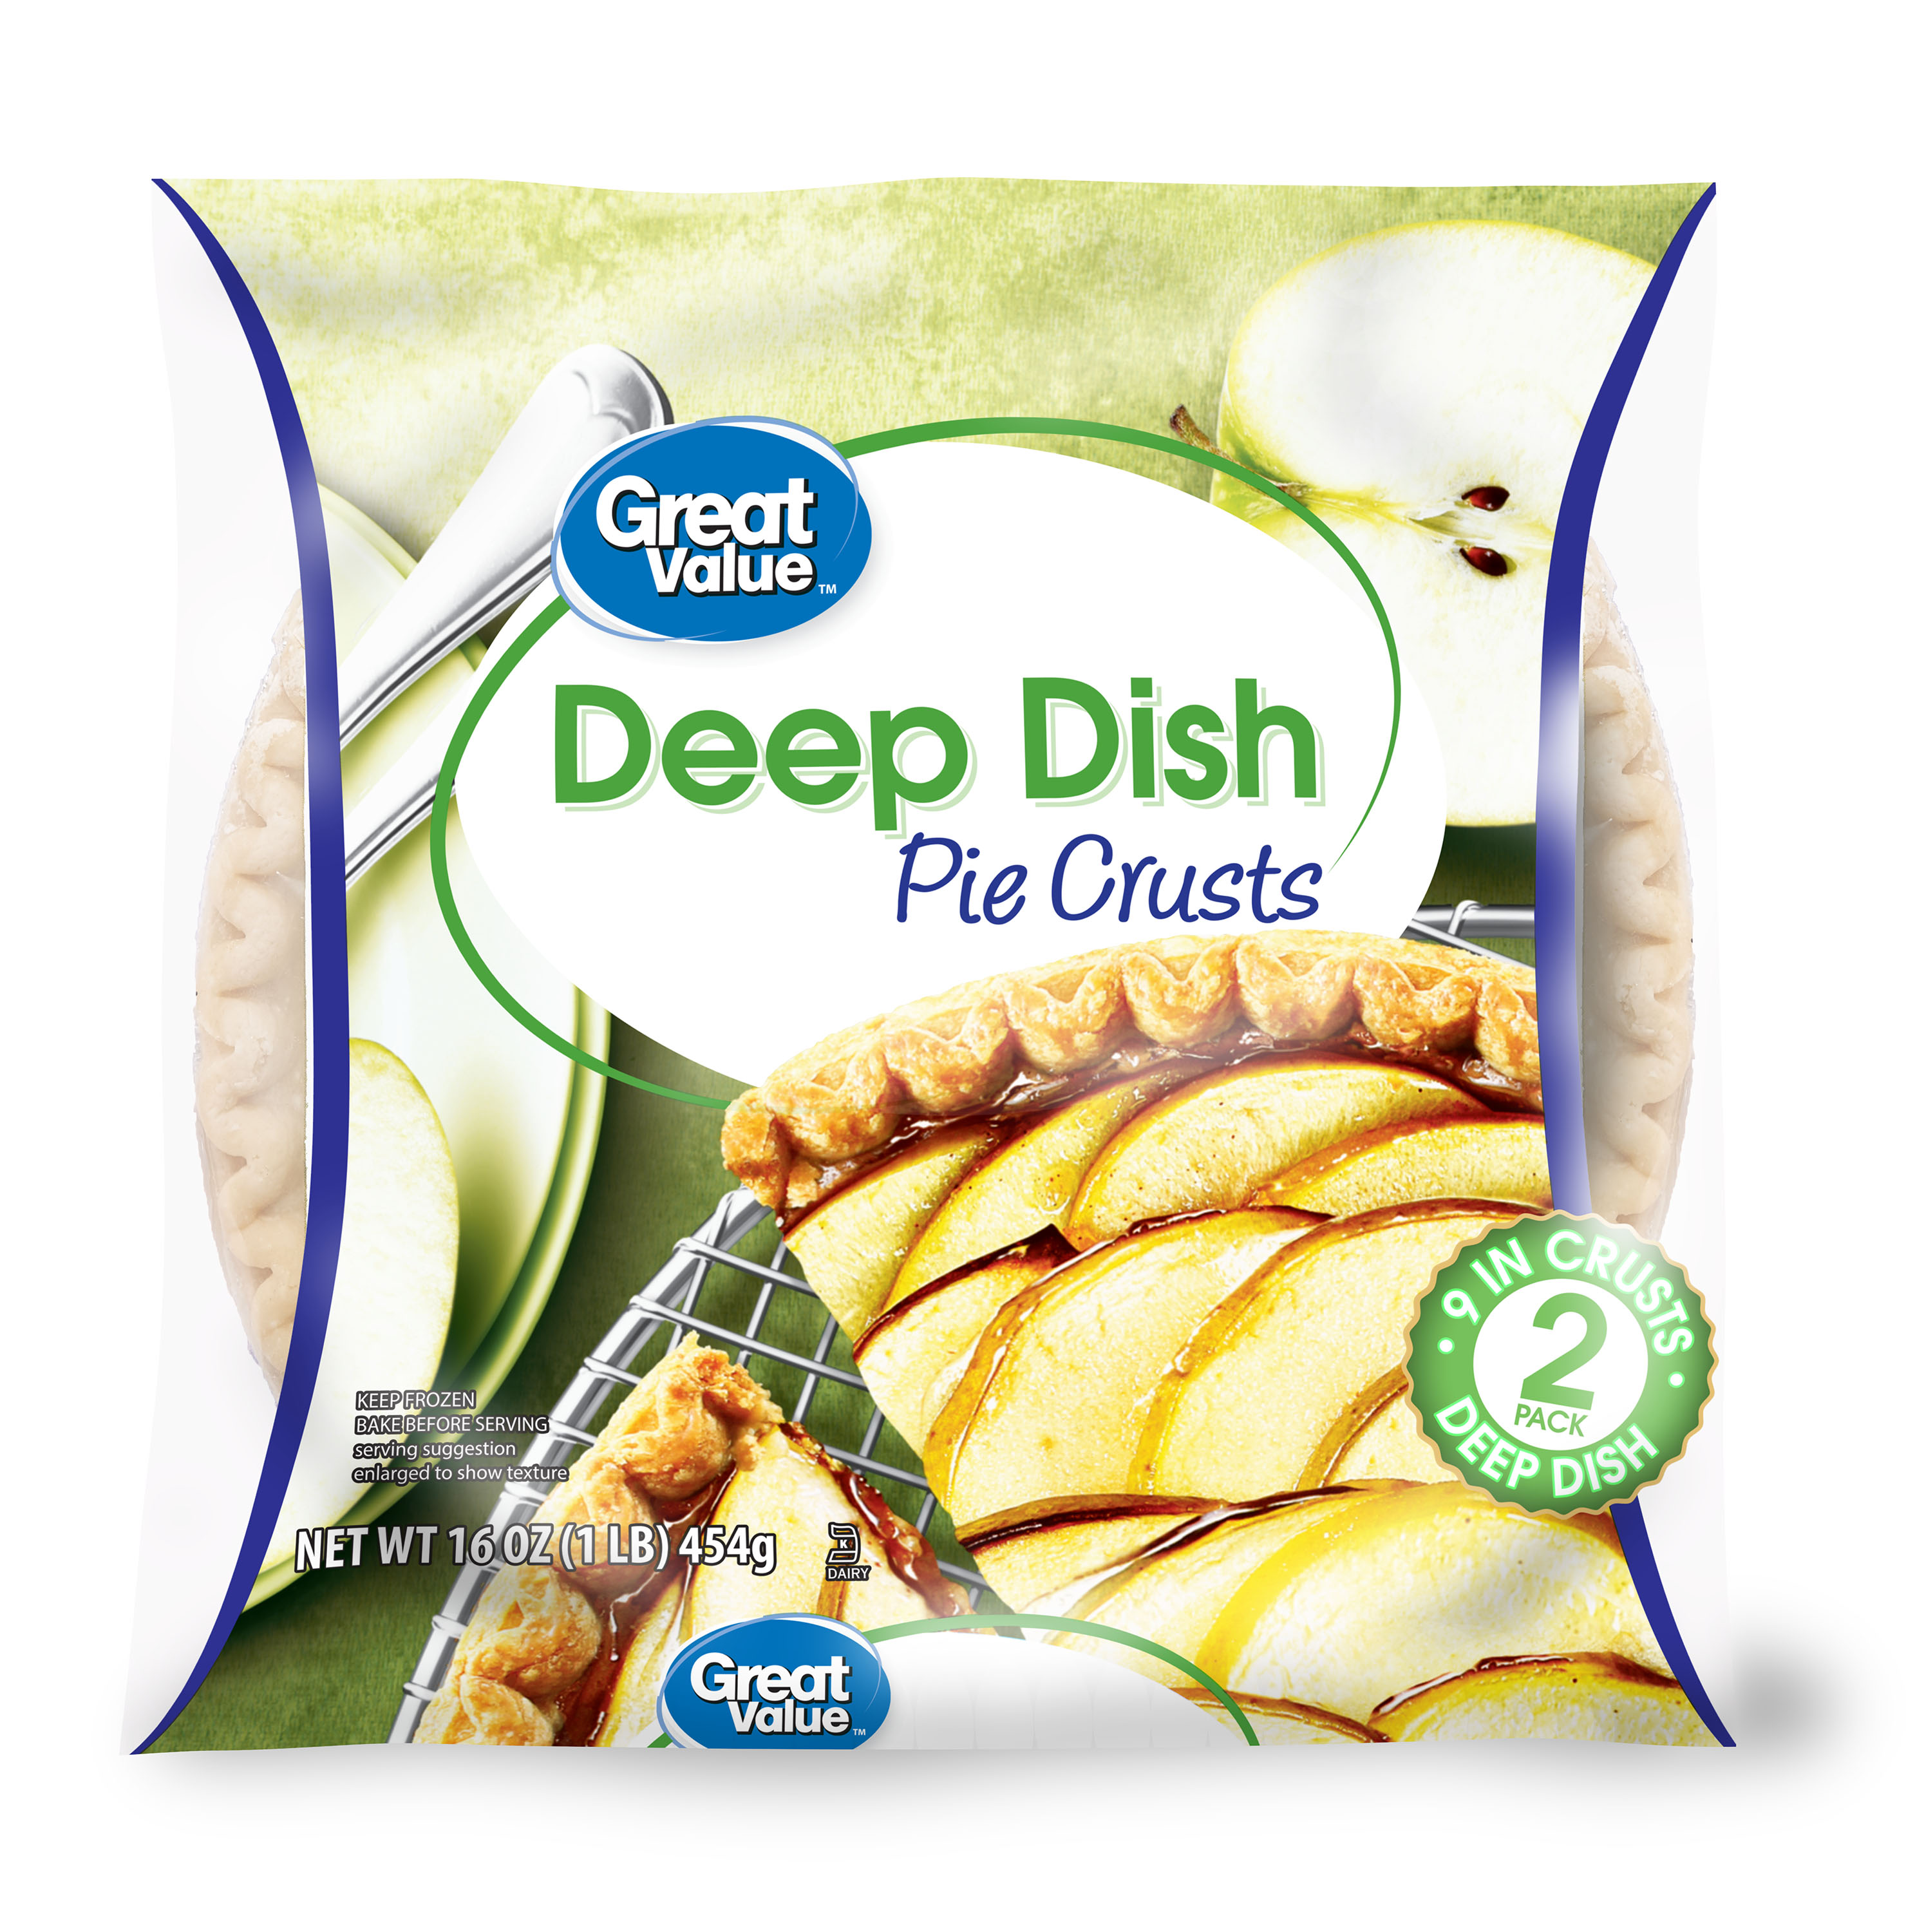 Great Value Deep Dish Pie Crusts, 9", 2 Count (Frozen) - image 1 of 9